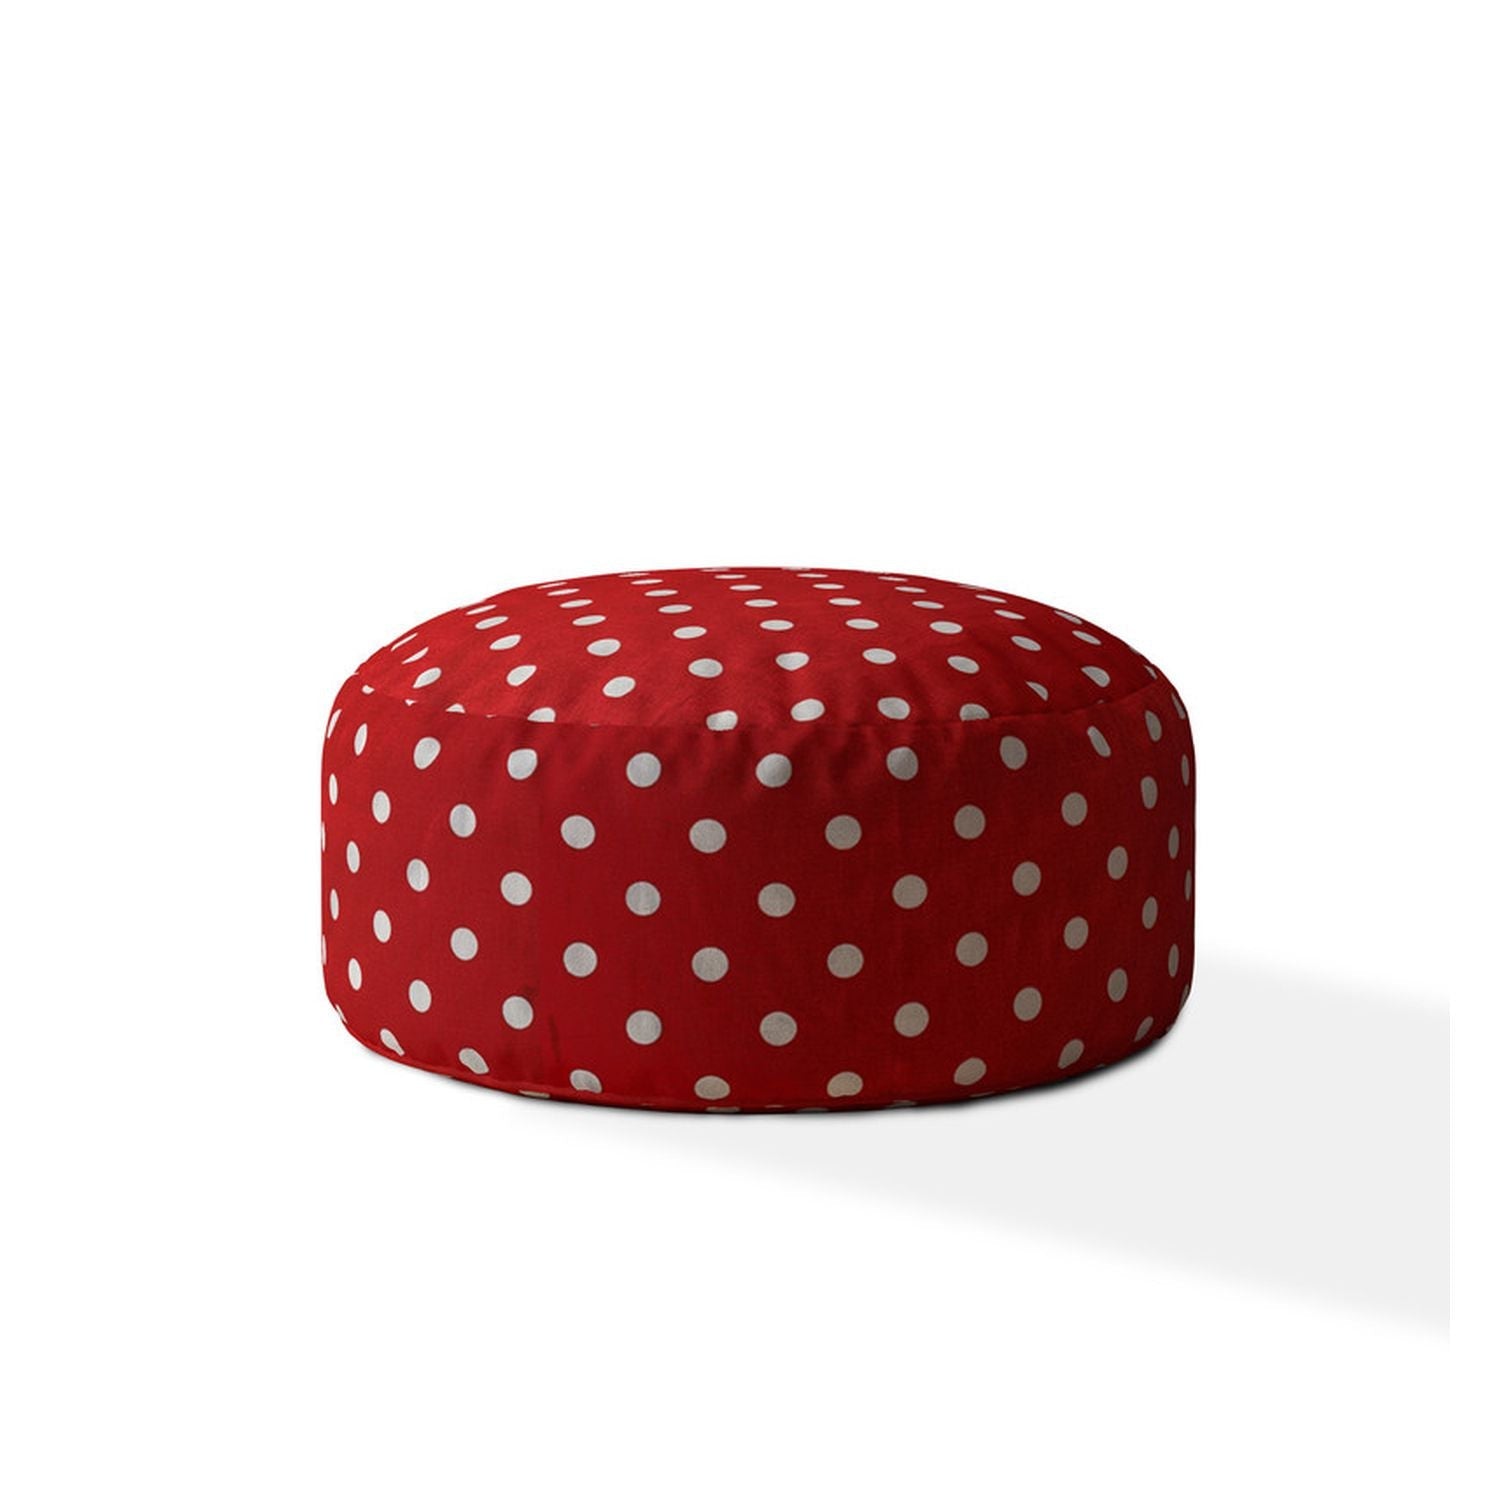 24" Red And White Cotton Round Polka Dots Pouf Ottoman